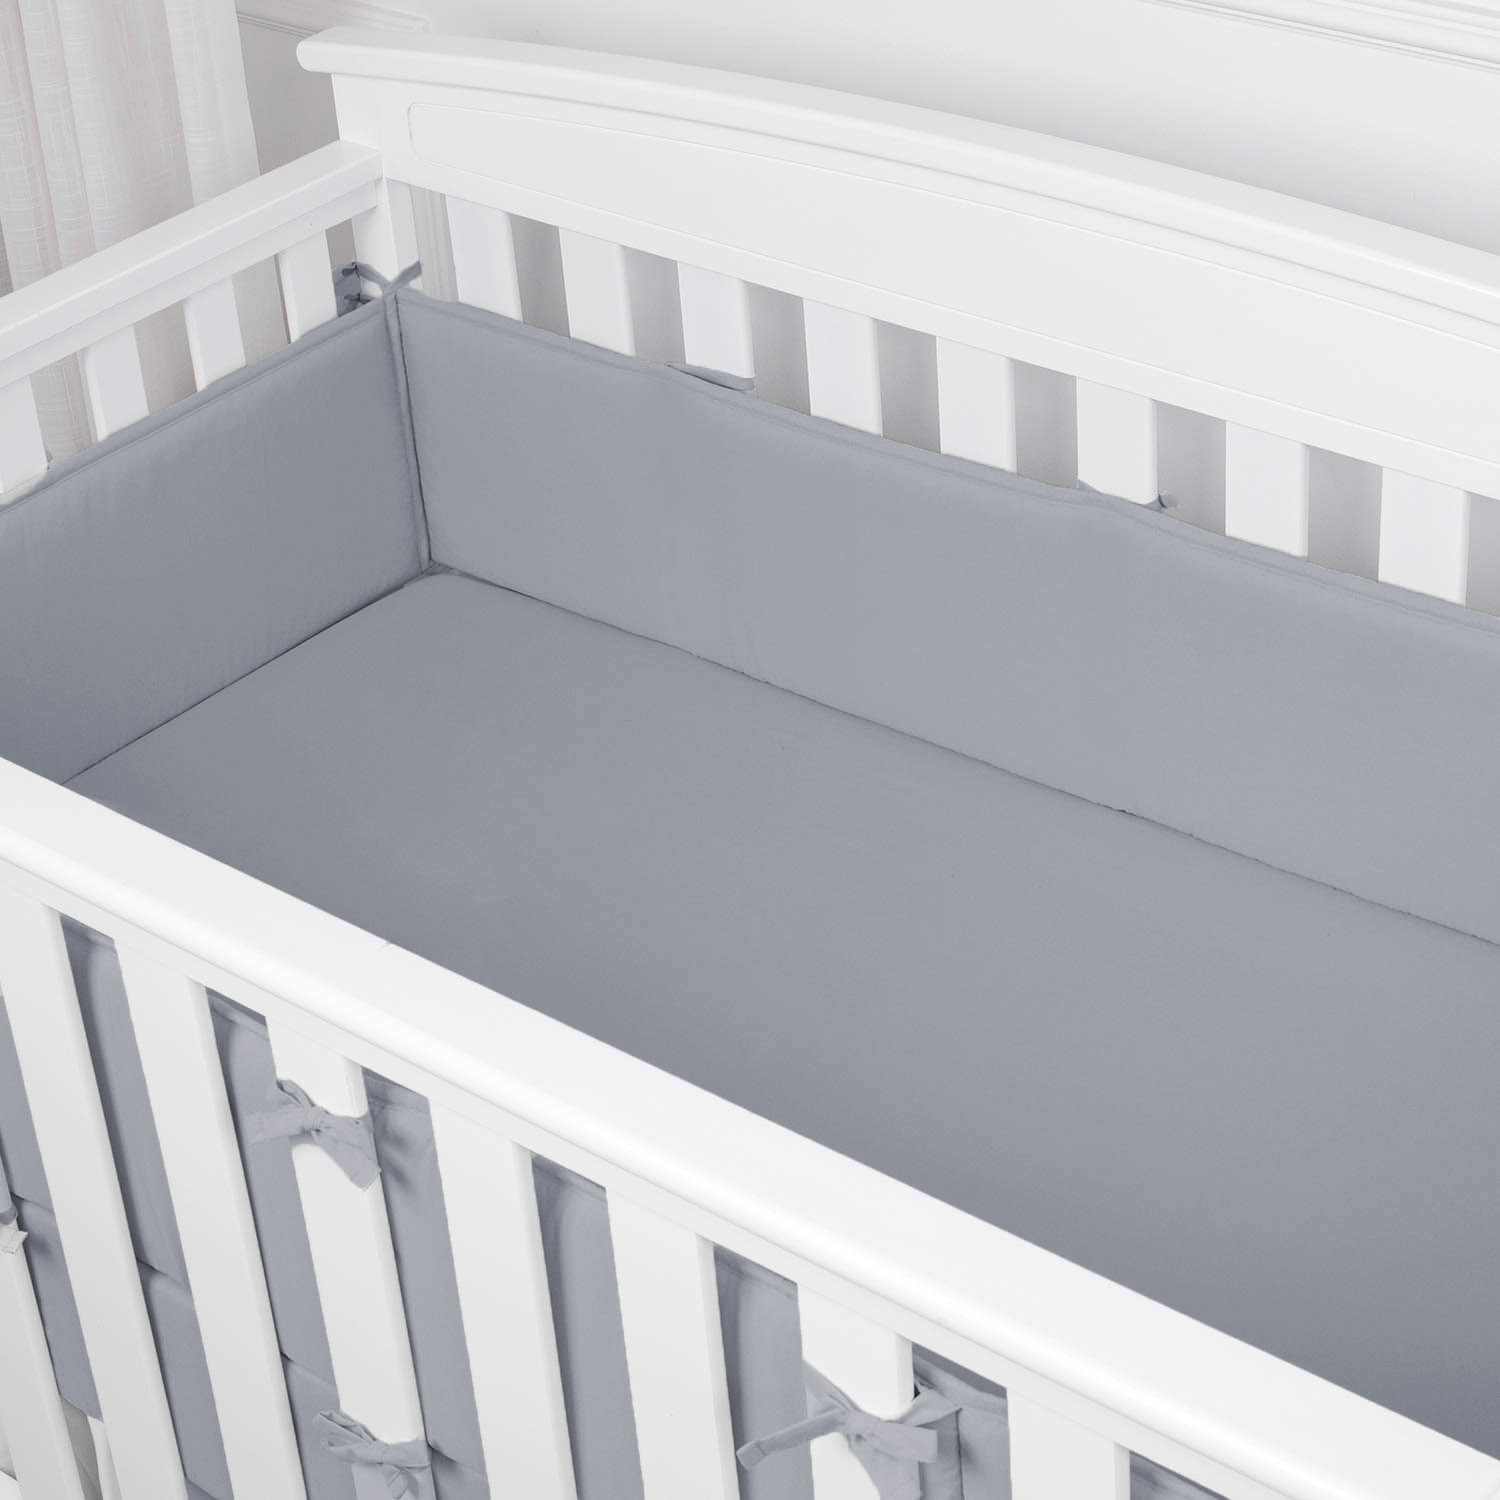 New Infant Guardrail Bed Circumference Four Piece Set - Cotton